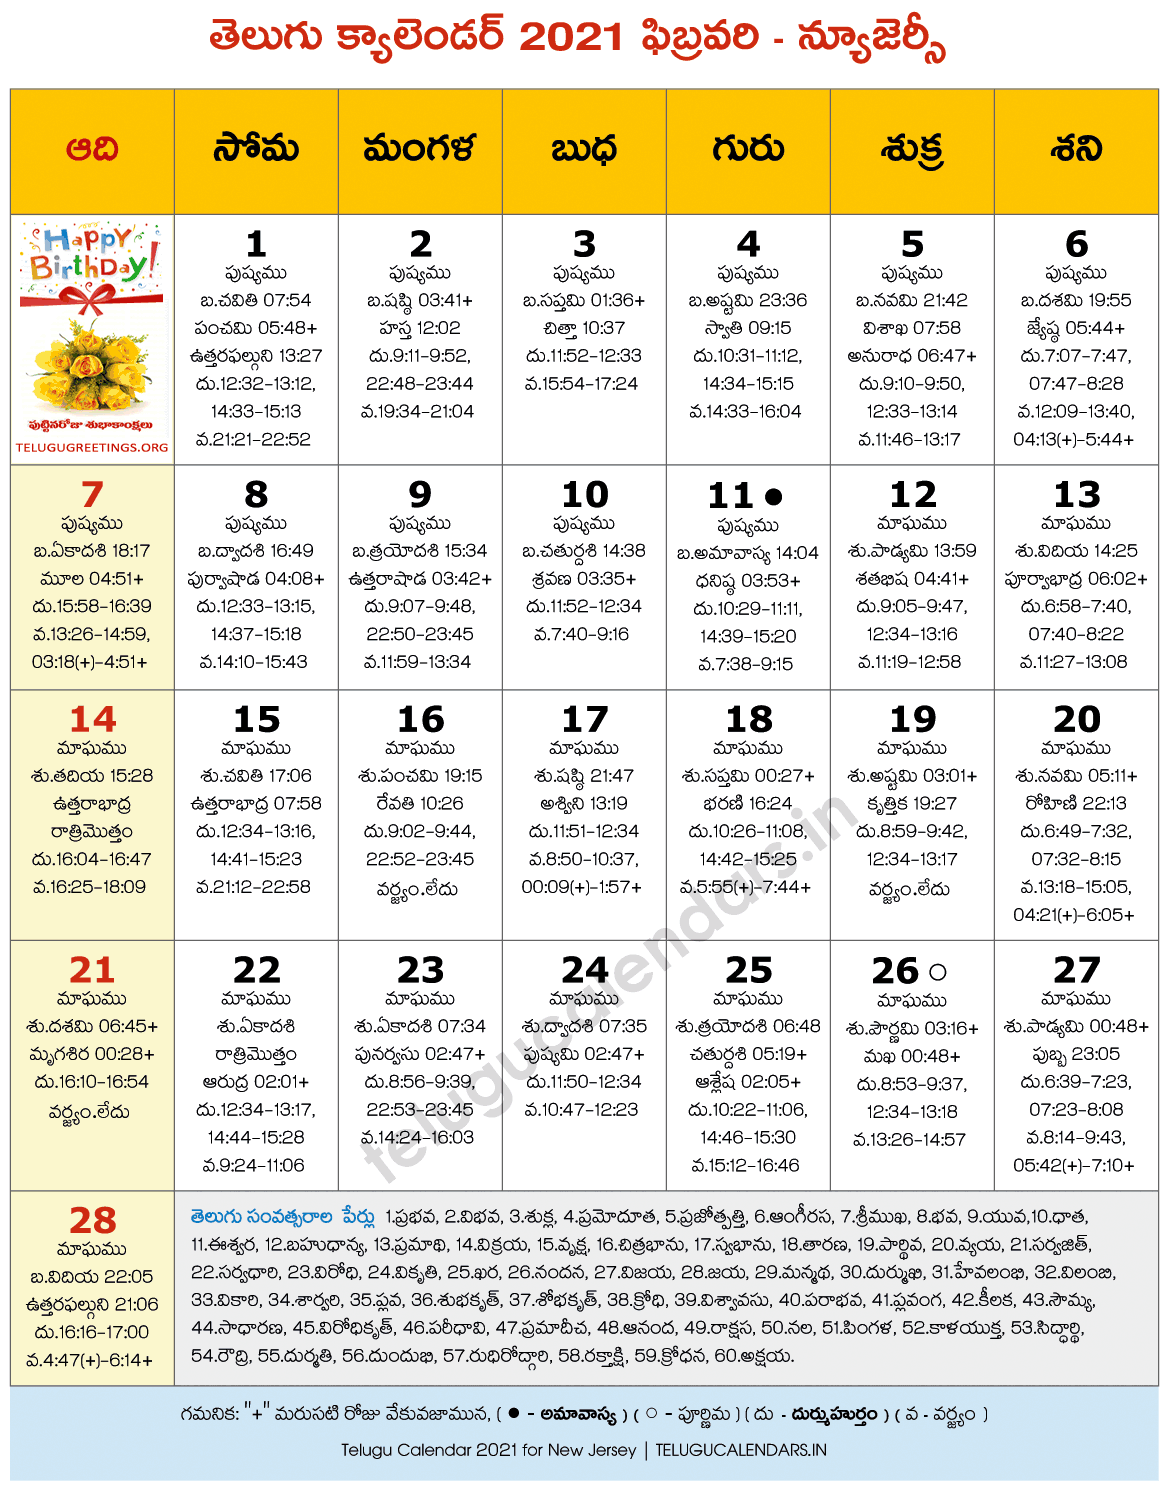 New Jersey Telugu Calendar 2022 New Jersey 2021 February Telugu Calendar - 2022 Telugu Calendar Pdf